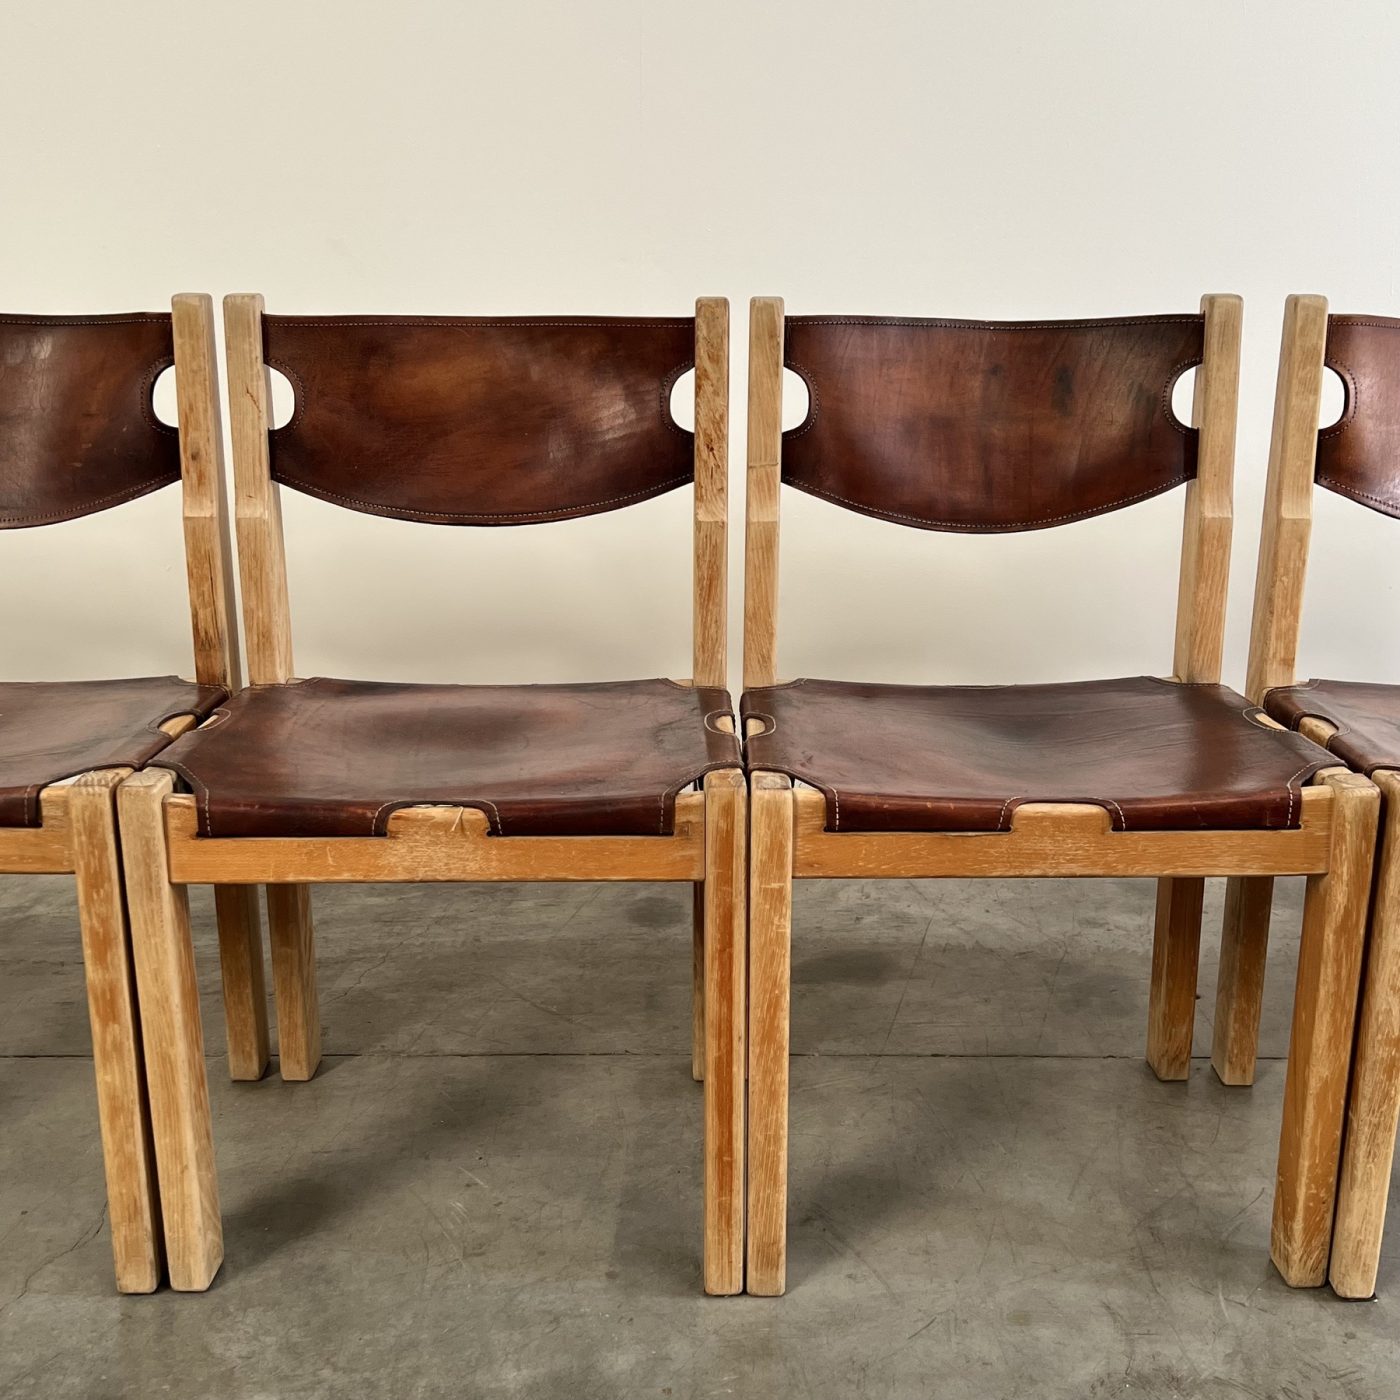 objet-vagabond-leather-chairs0002